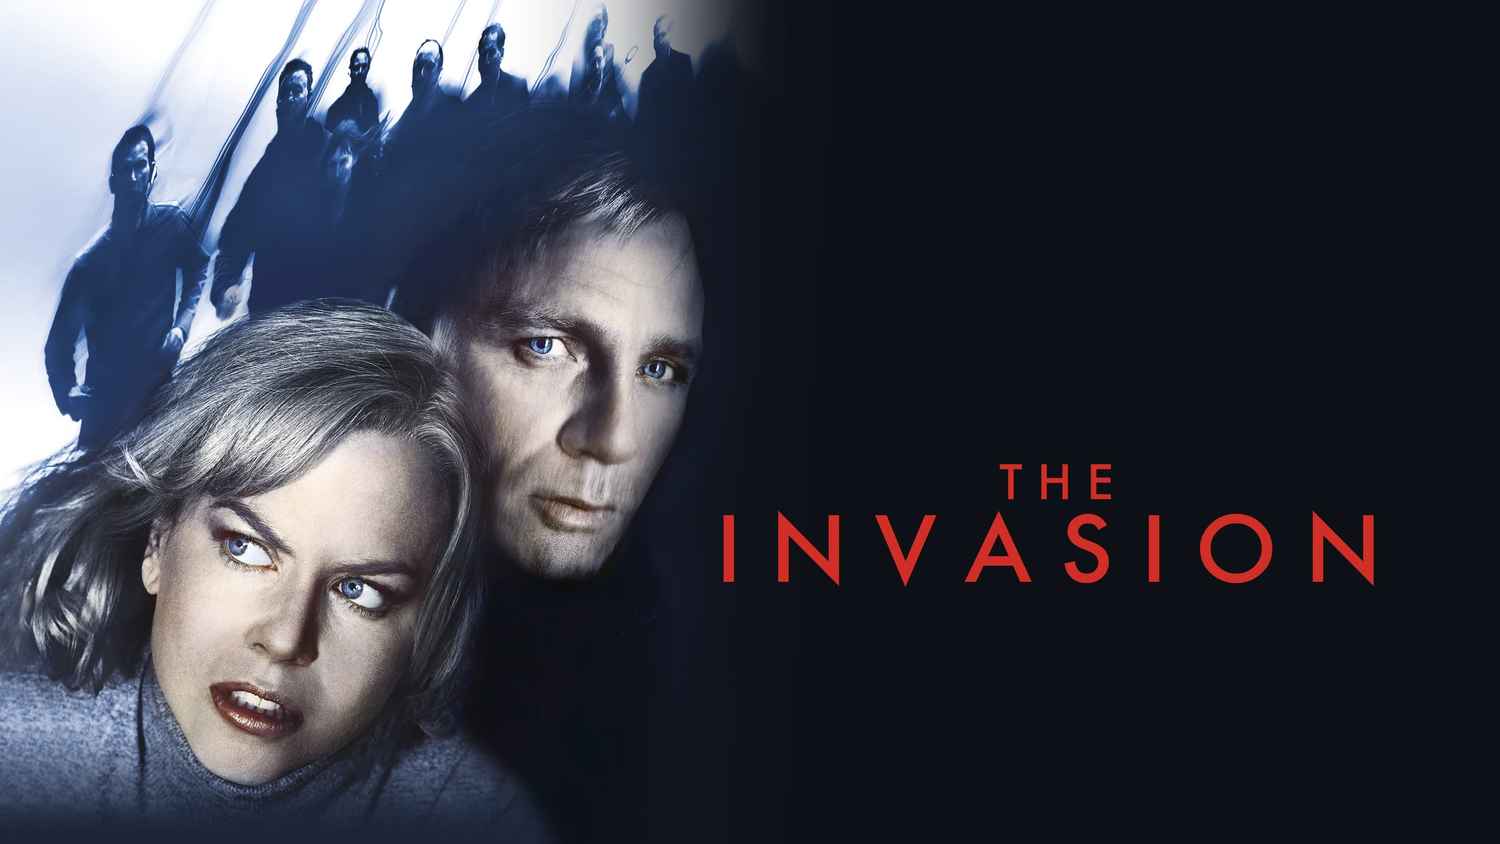 Watch The Invasion Movie Online, Release Date, Trailer, Cast